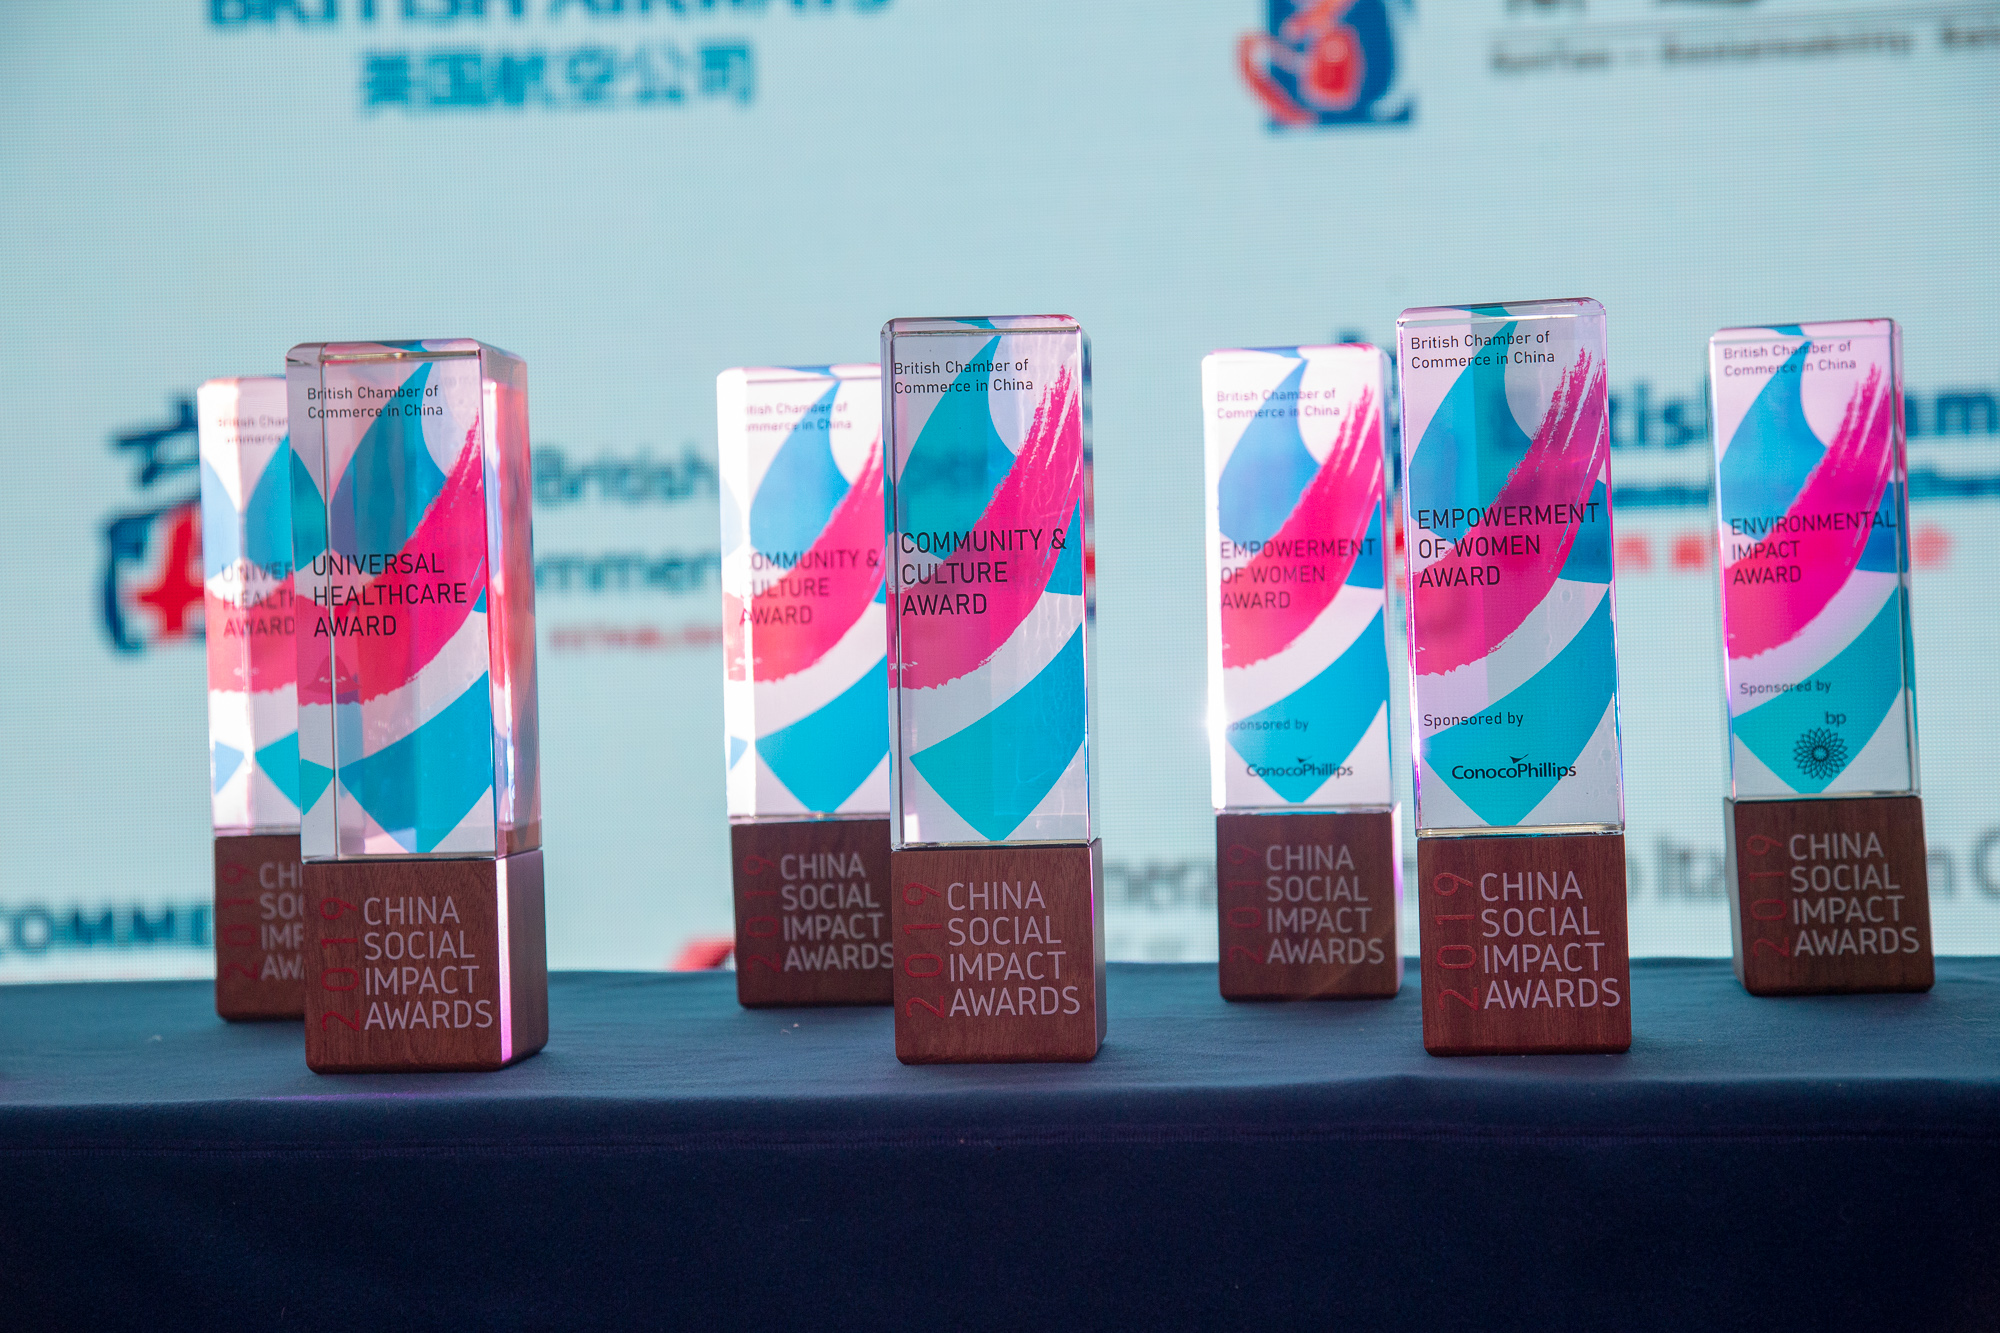 2019 China Social Impact Awards winner